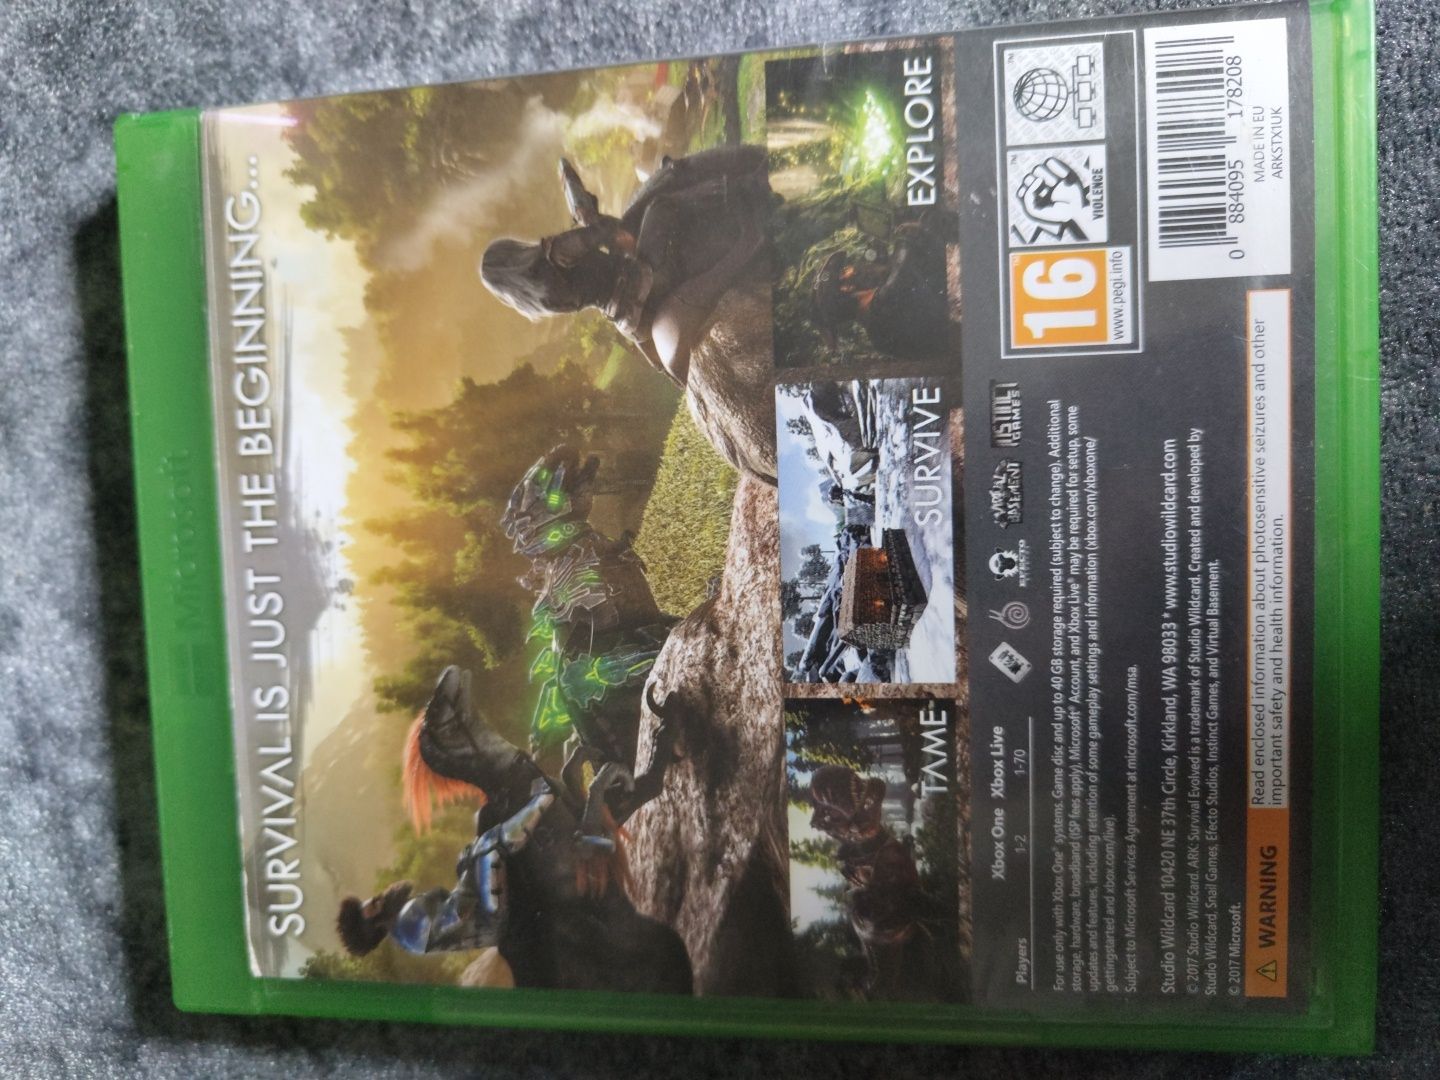 ARK Survival Evolved Xbox One